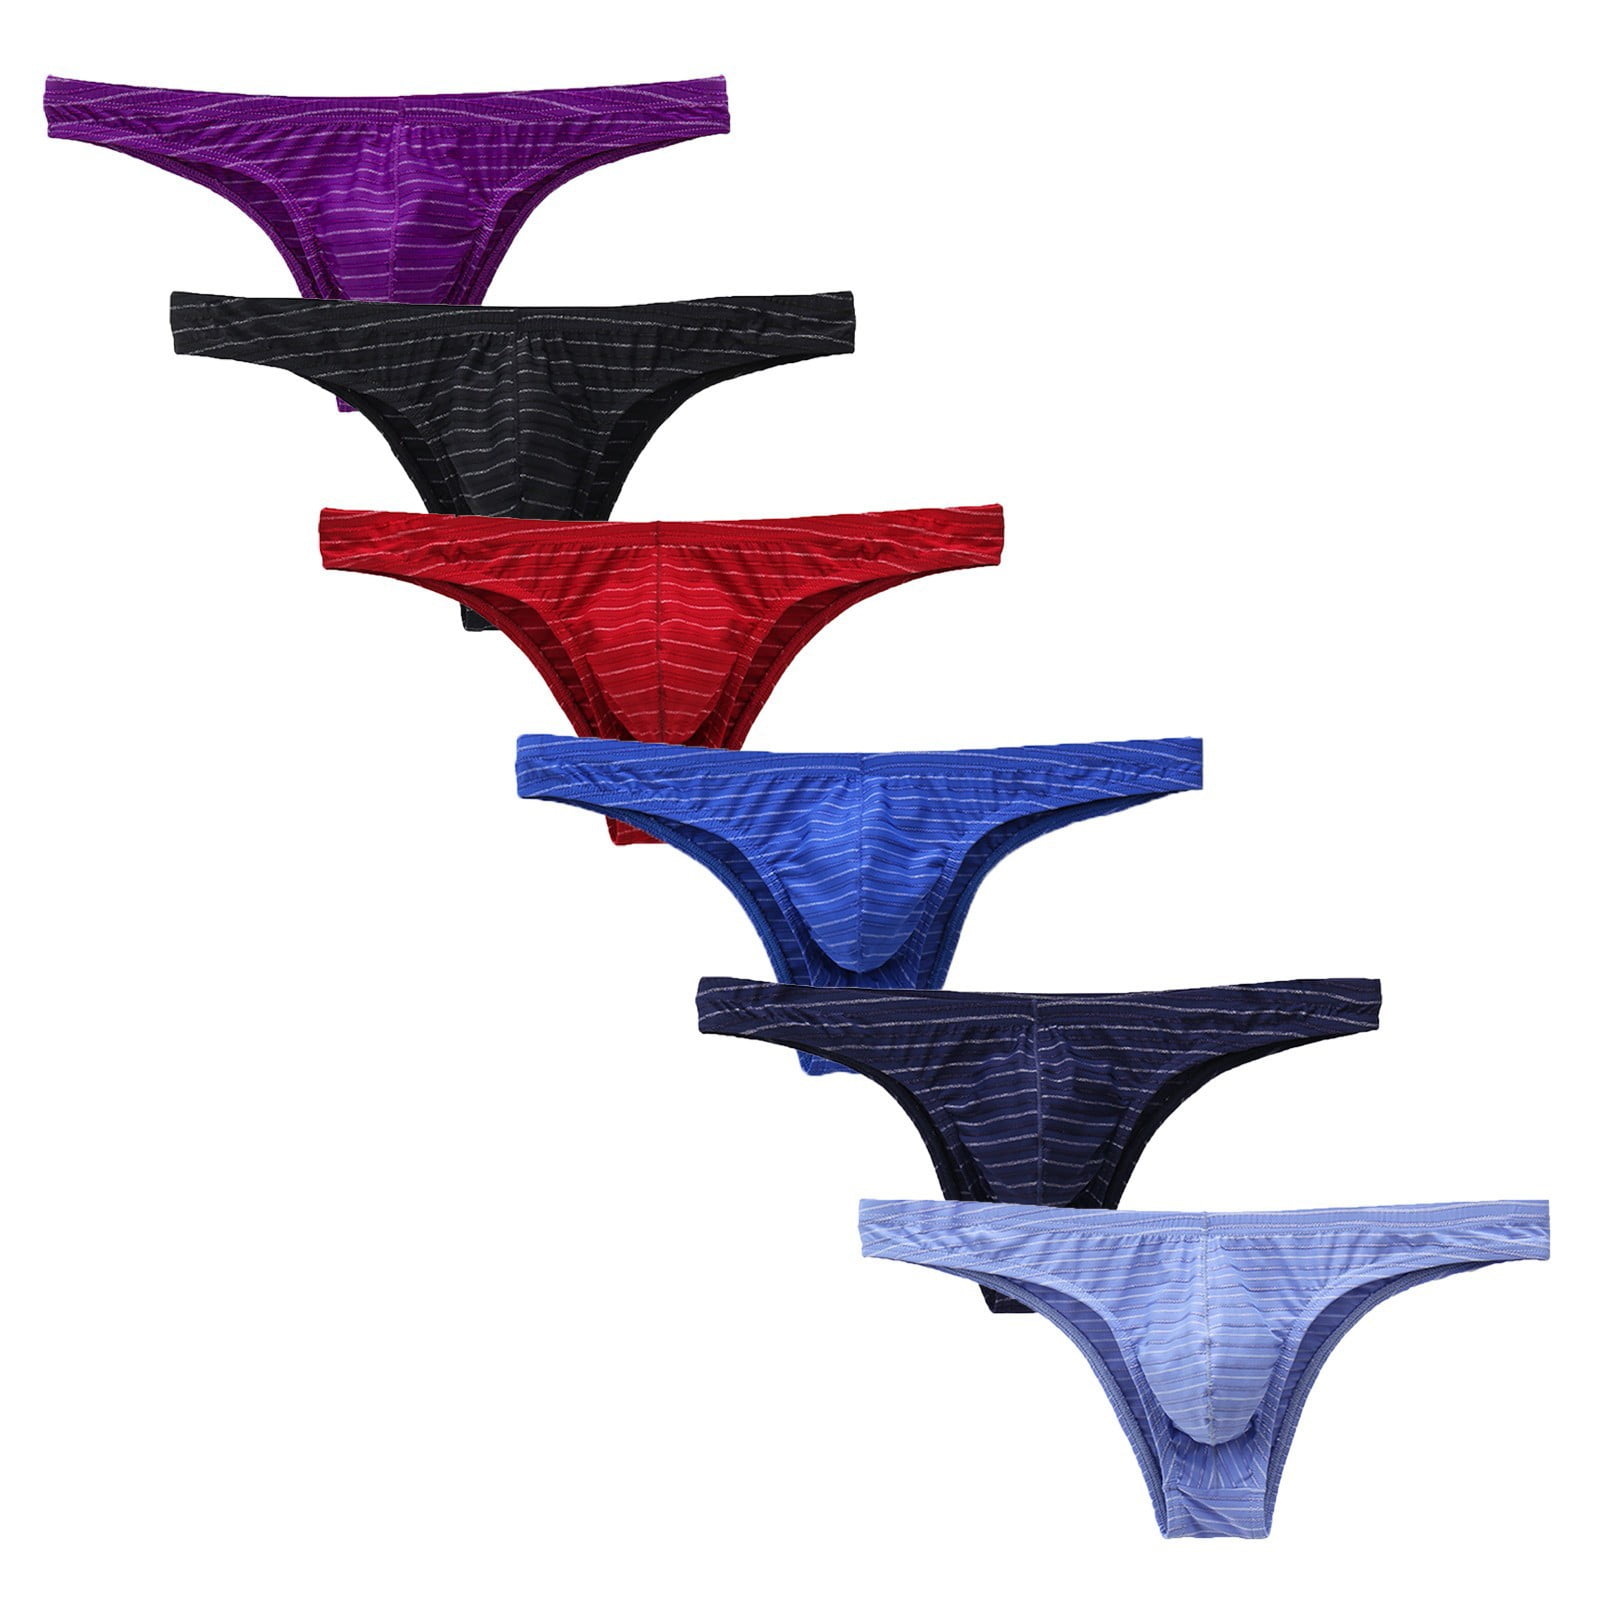 IKINGSKY Men's Pouch G-string Underwear Big Package India